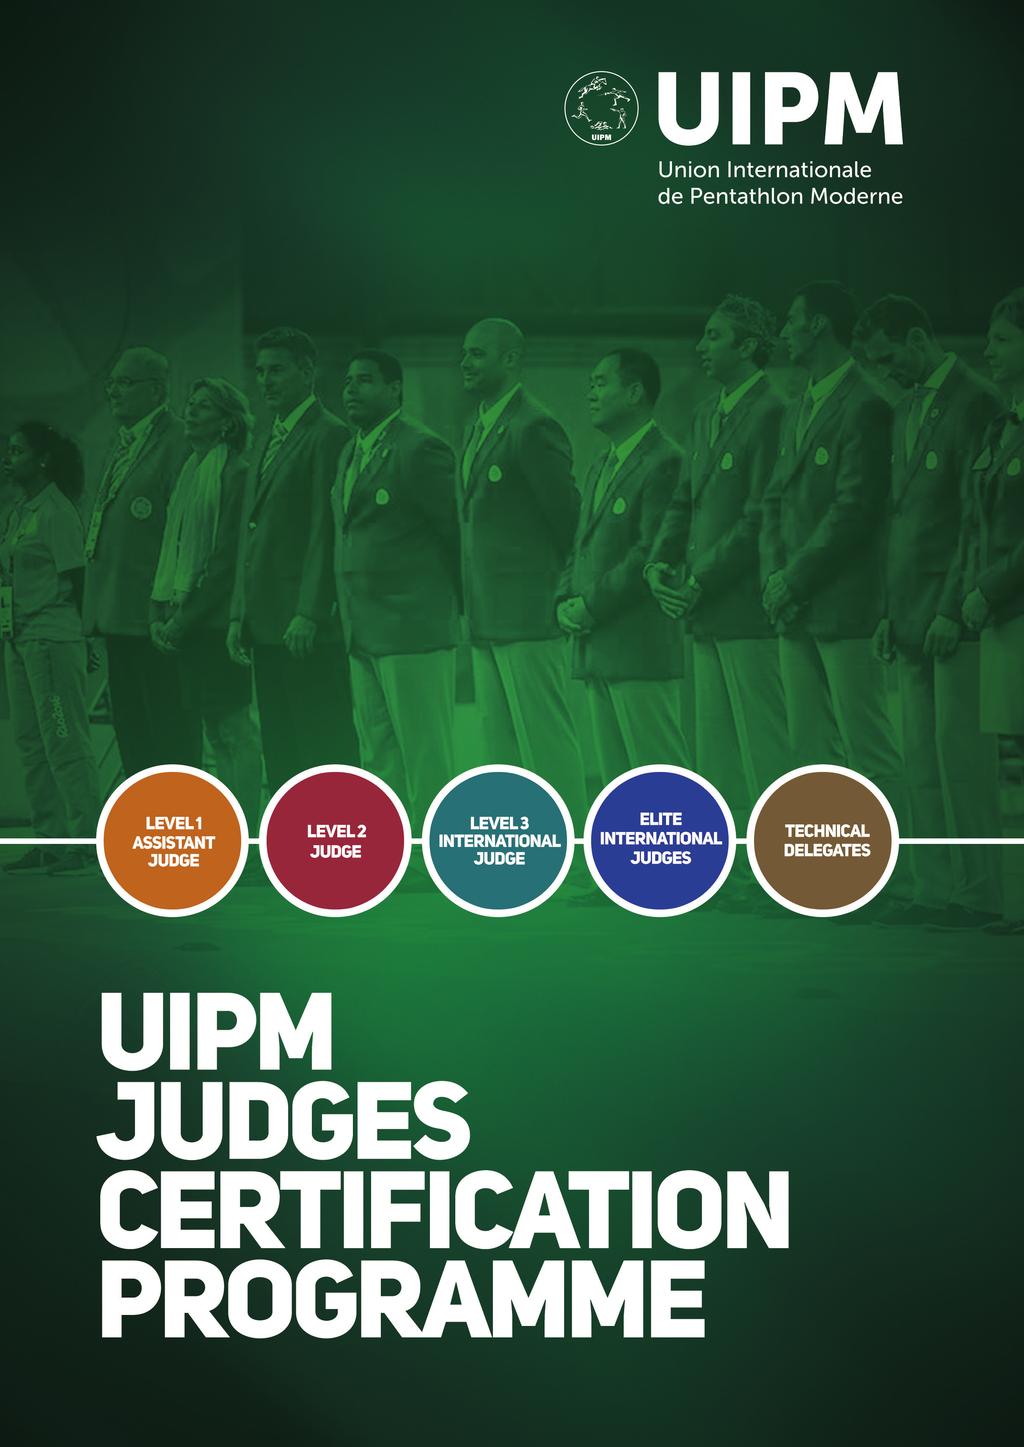 UIPM JUDGES CERTIFICATION PROGRAMME